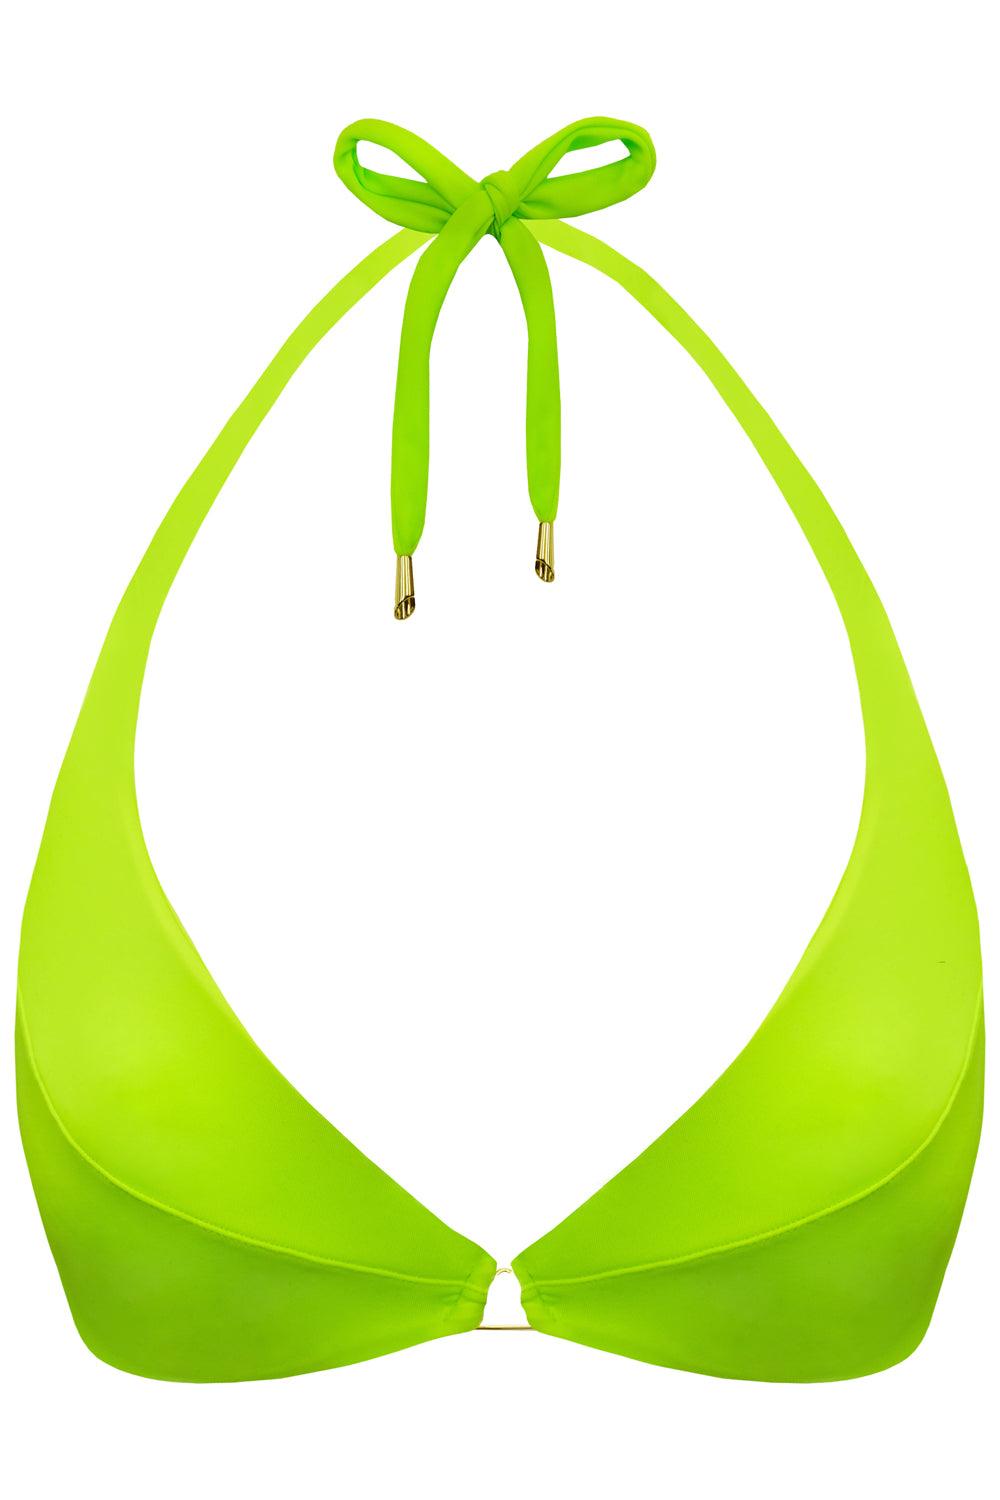 Radiya Greenery bikini top - Bikini top by yesUndress. Shop on yesUndress